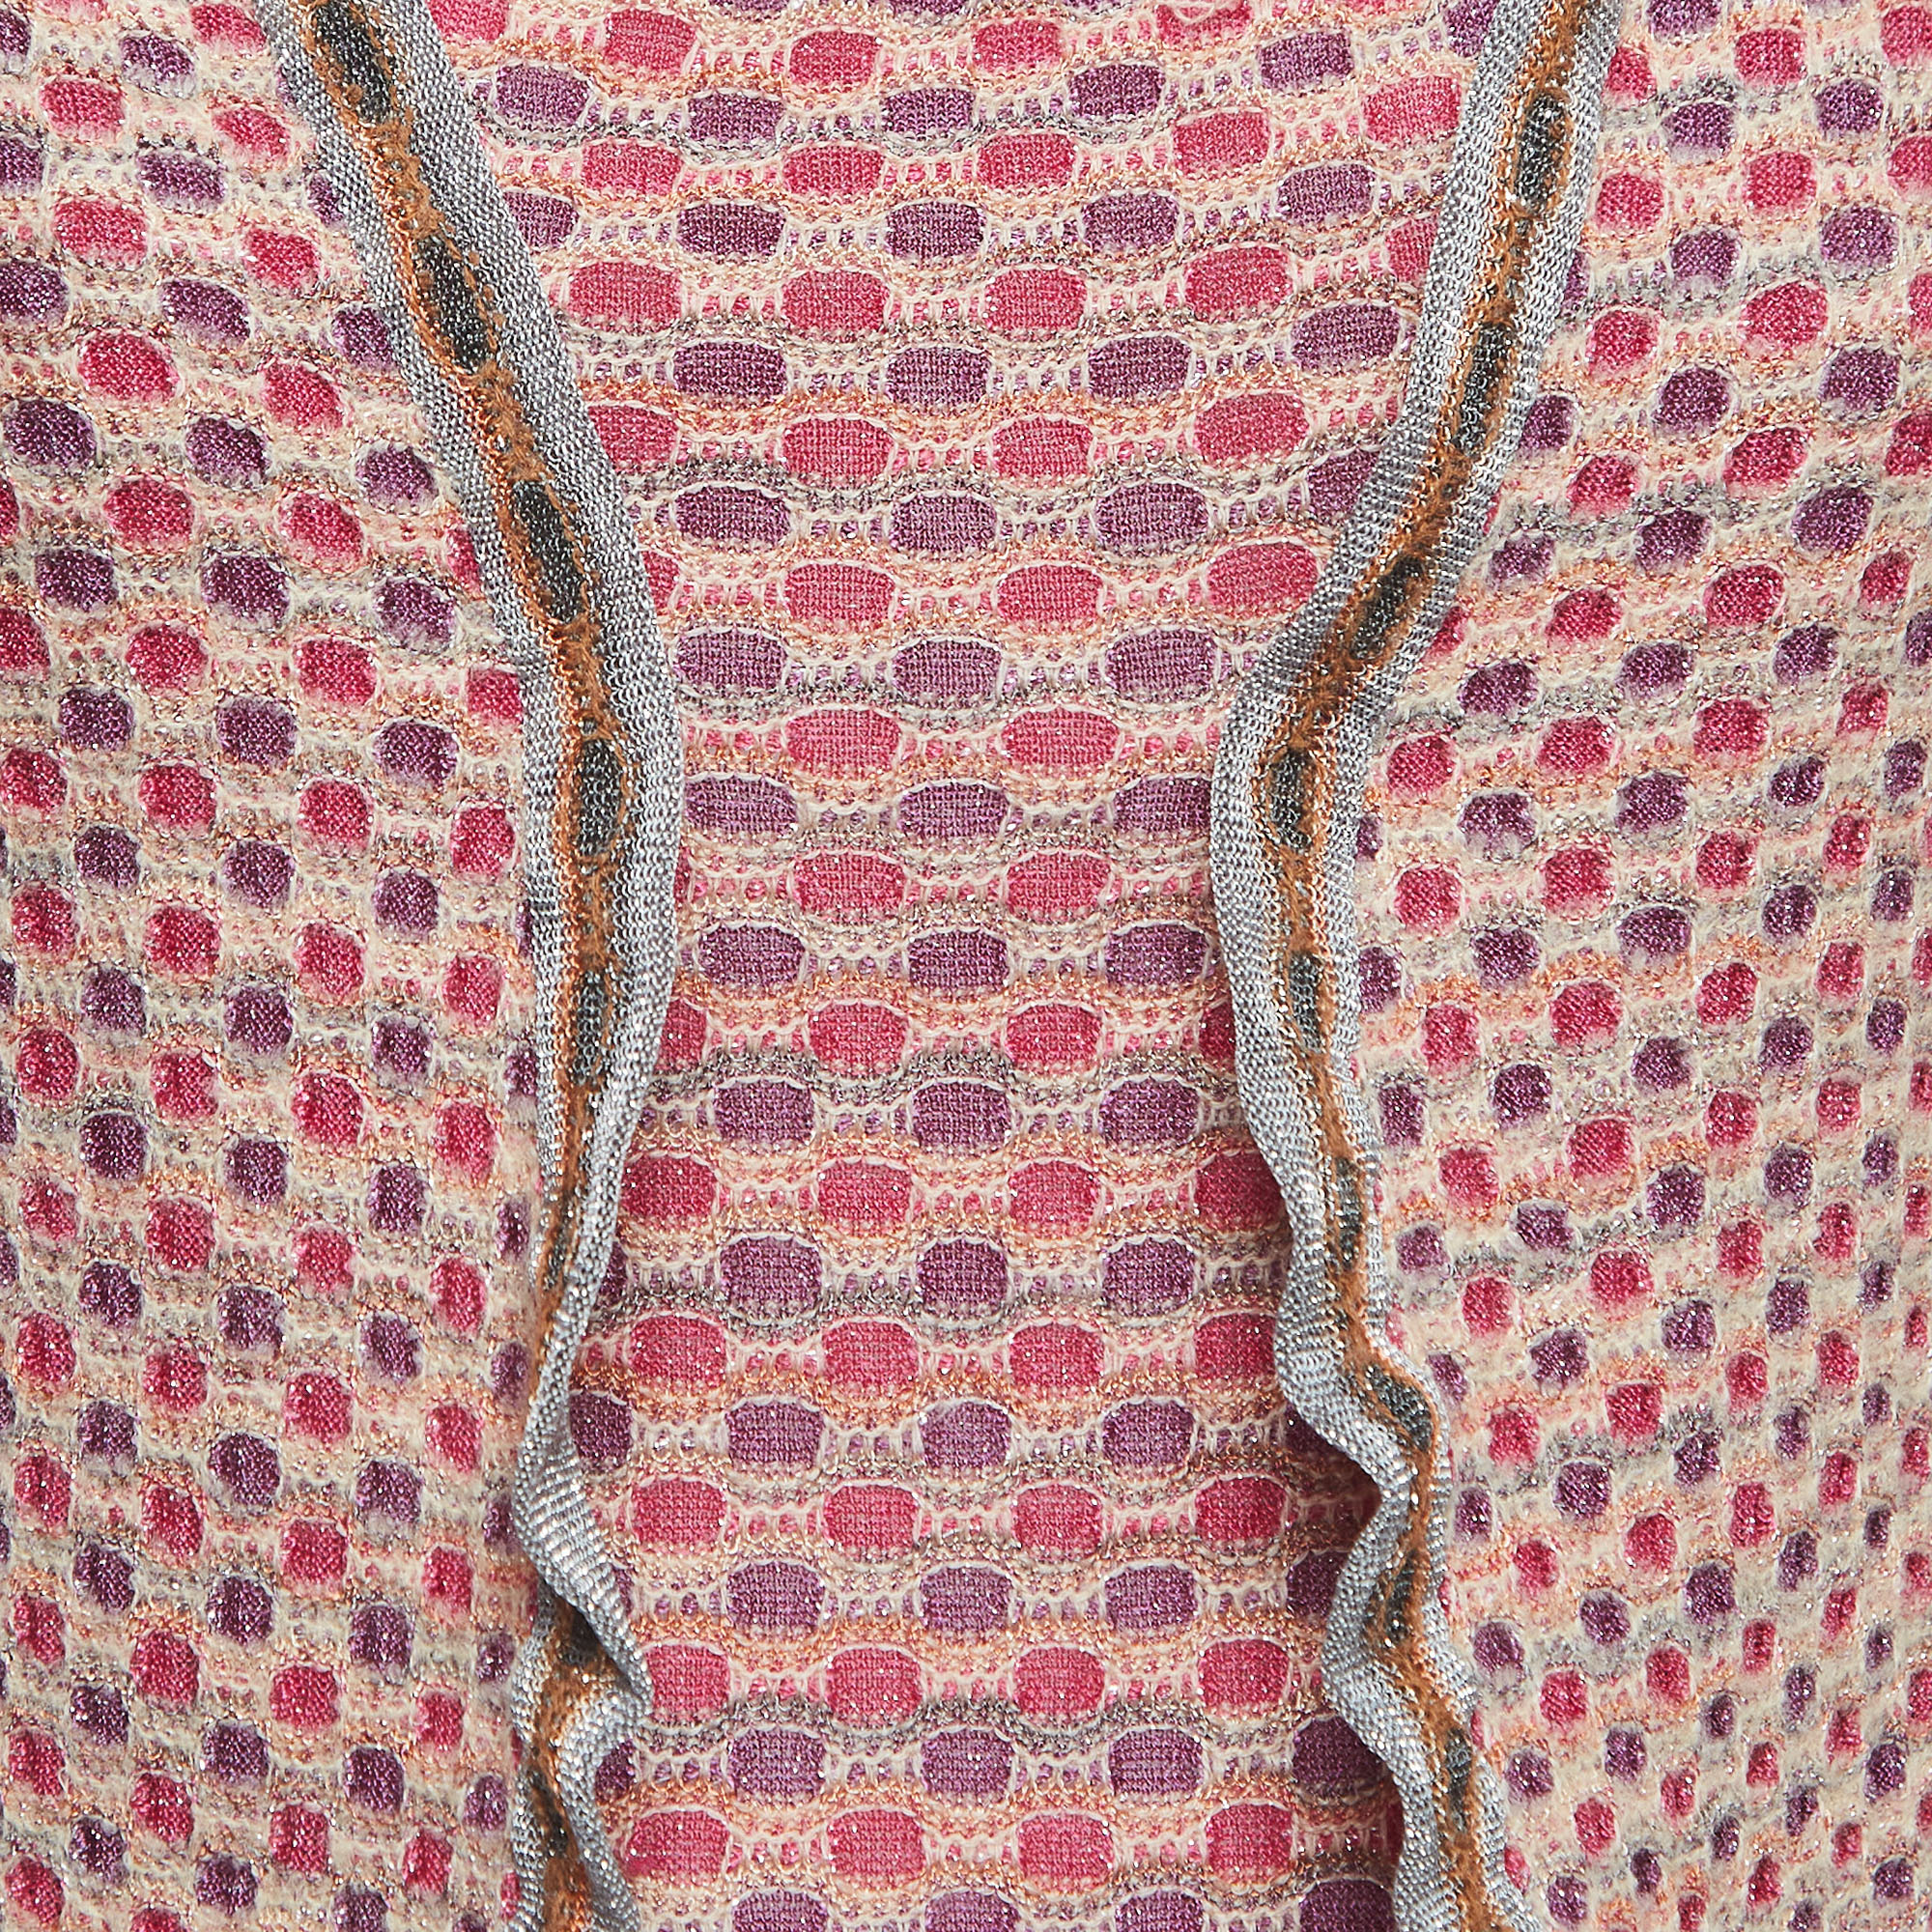 M Missoni Multicolor Patterned Knit Top Shrug Set L